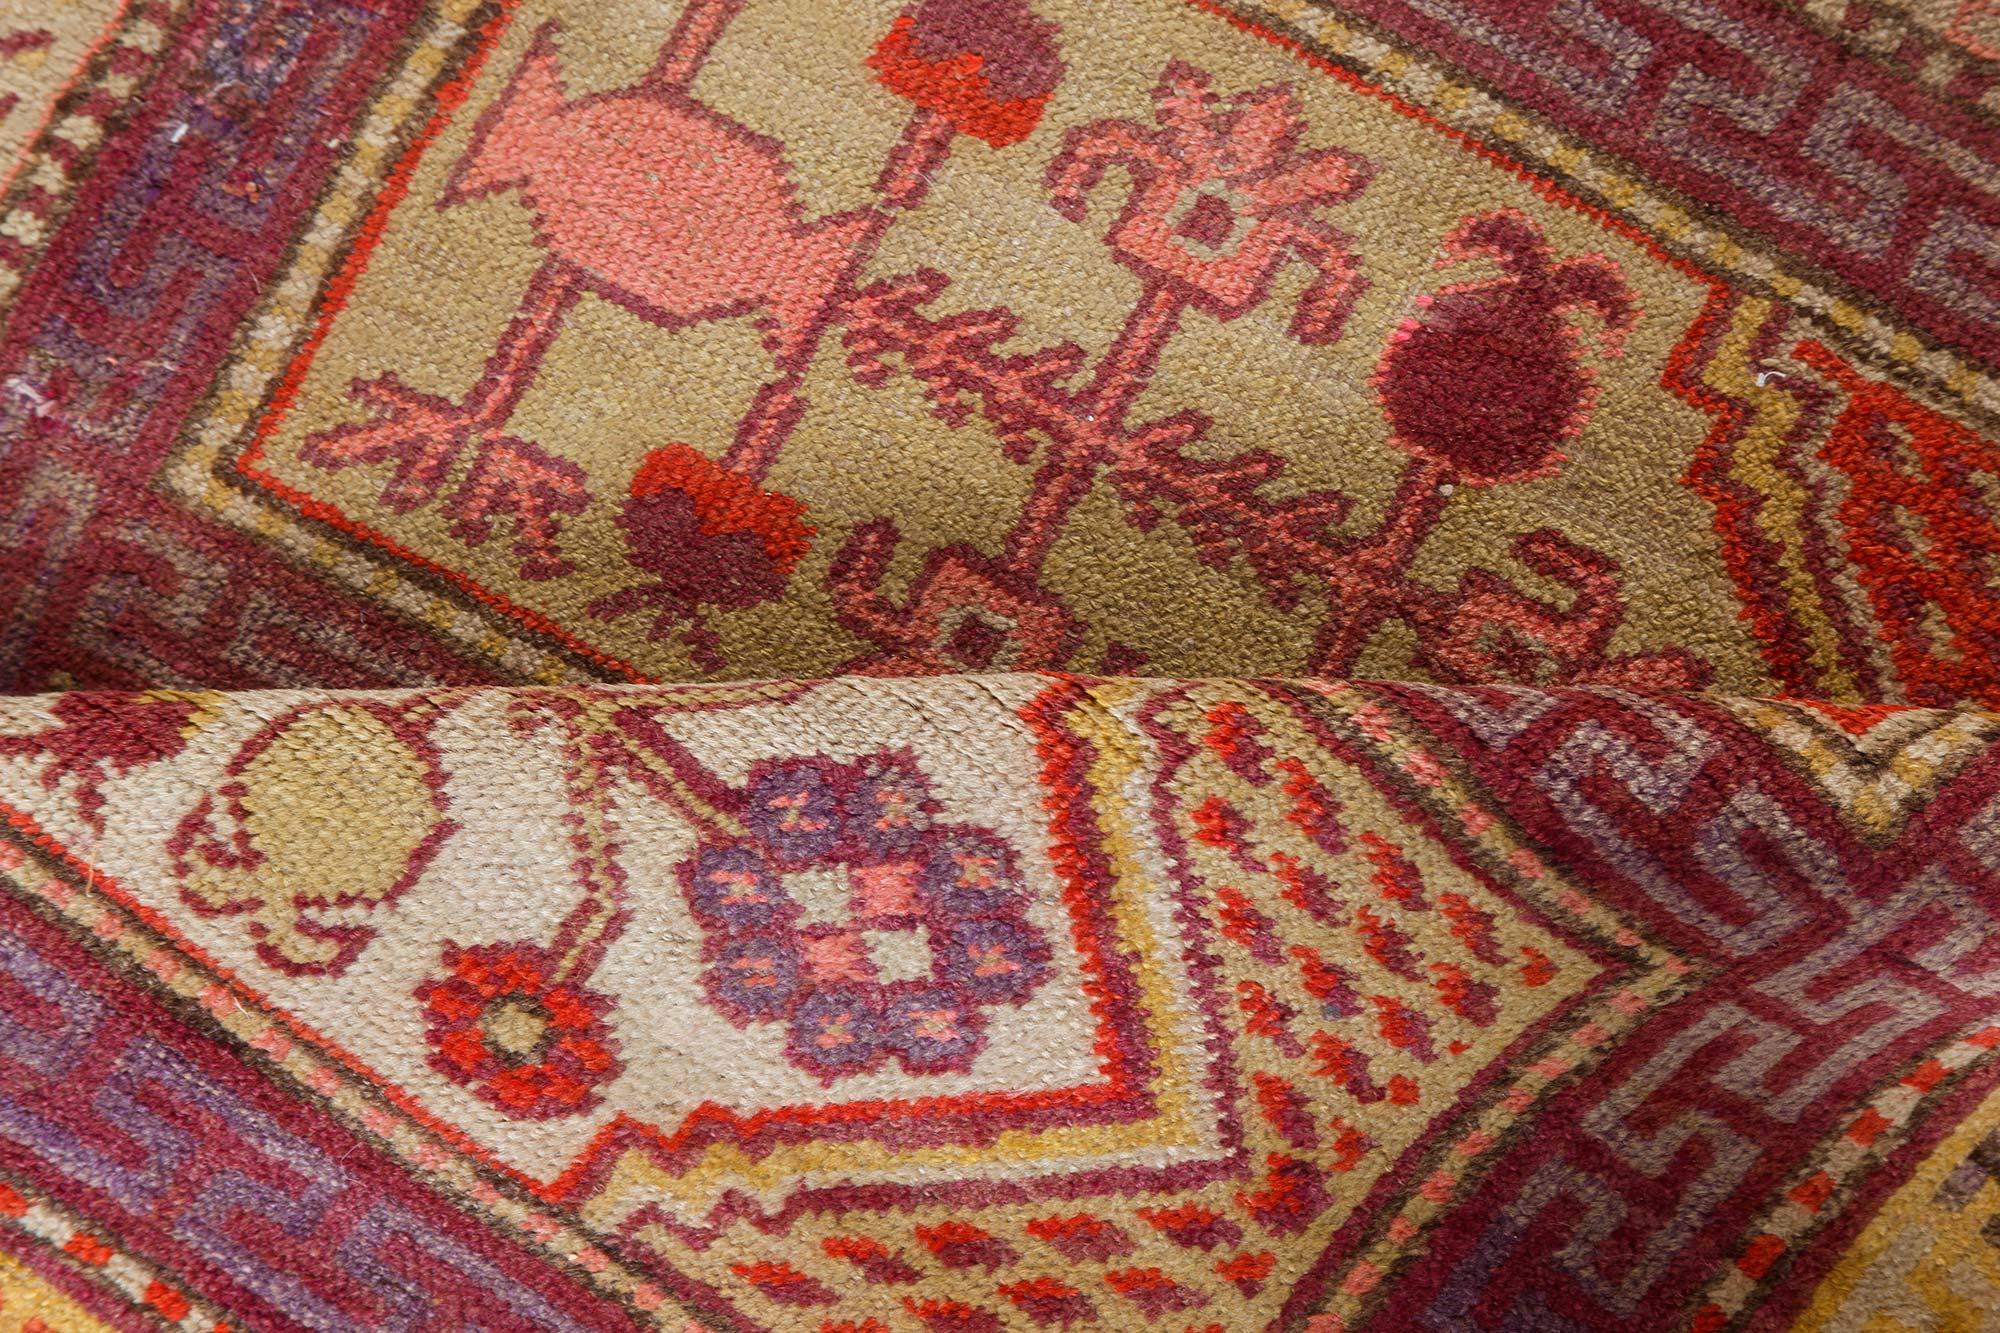 Mid-20th century Khotan 'Samarkand' handmade wool rug in purple, red and yellow.
Size: 4'11